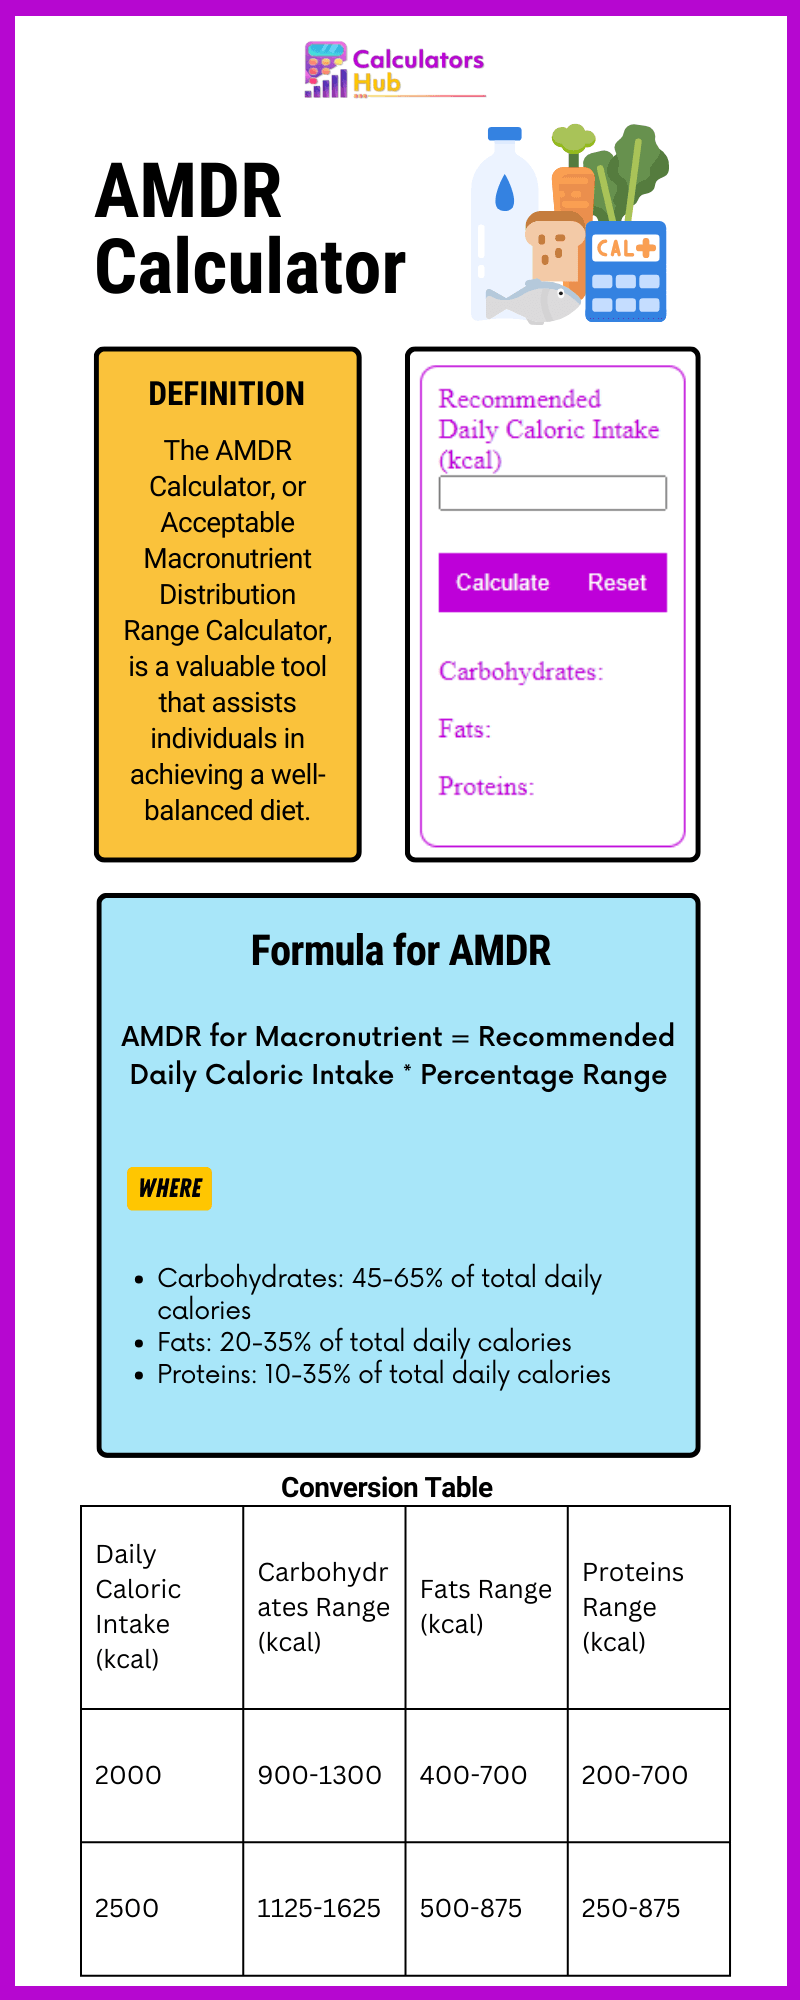 AMDR Calculator